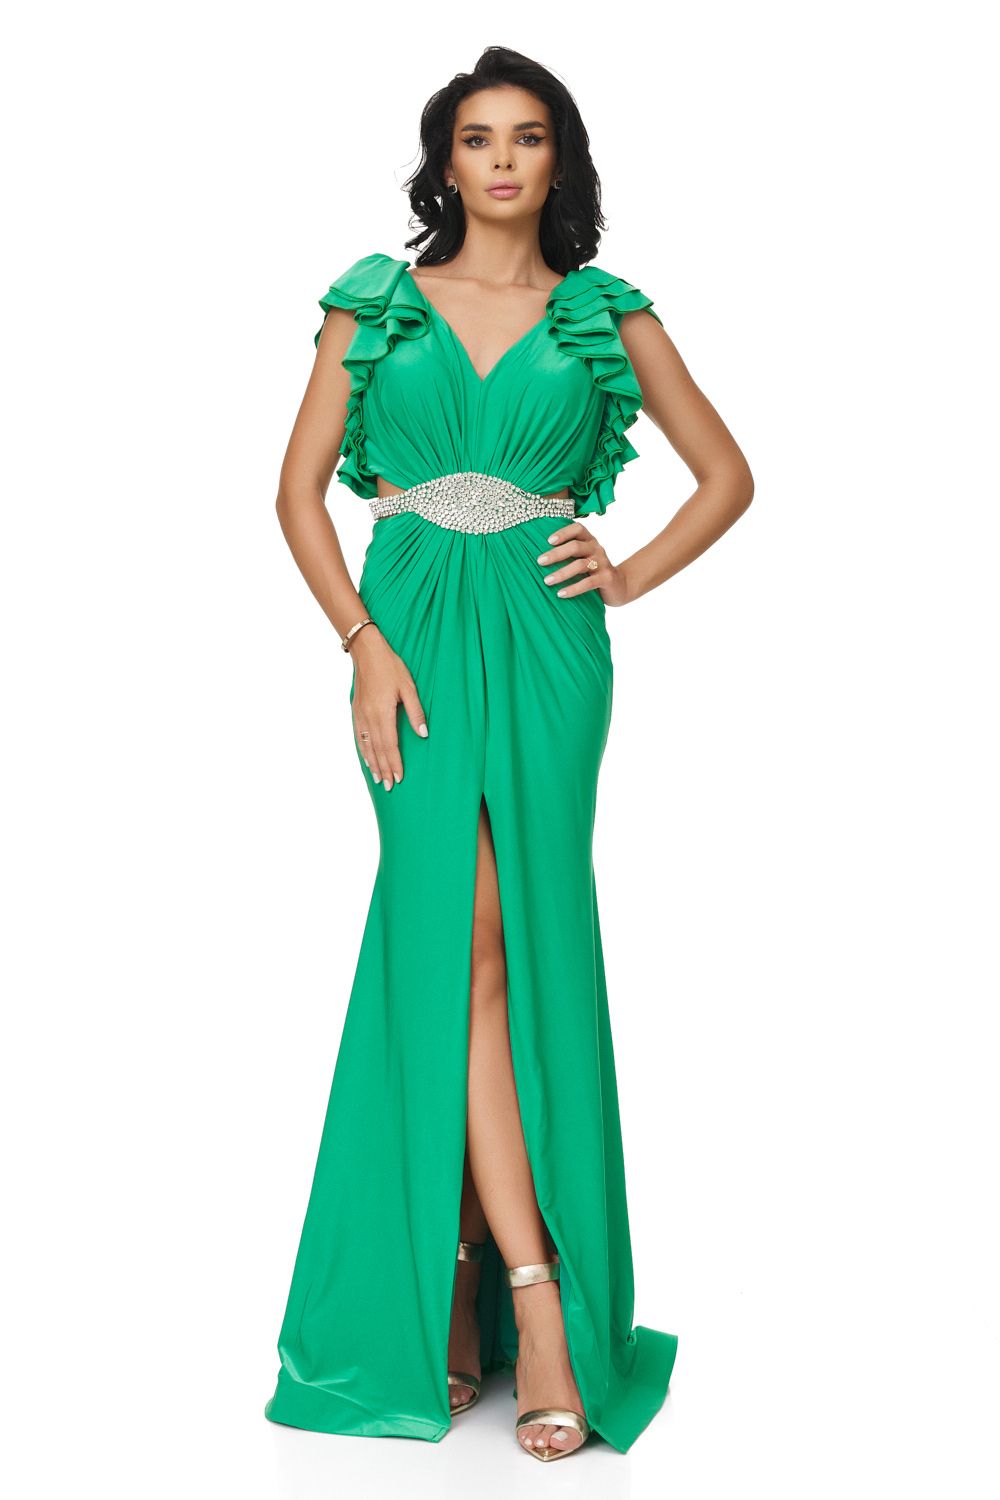 Helisay Bogas hosszú zöld női ruha